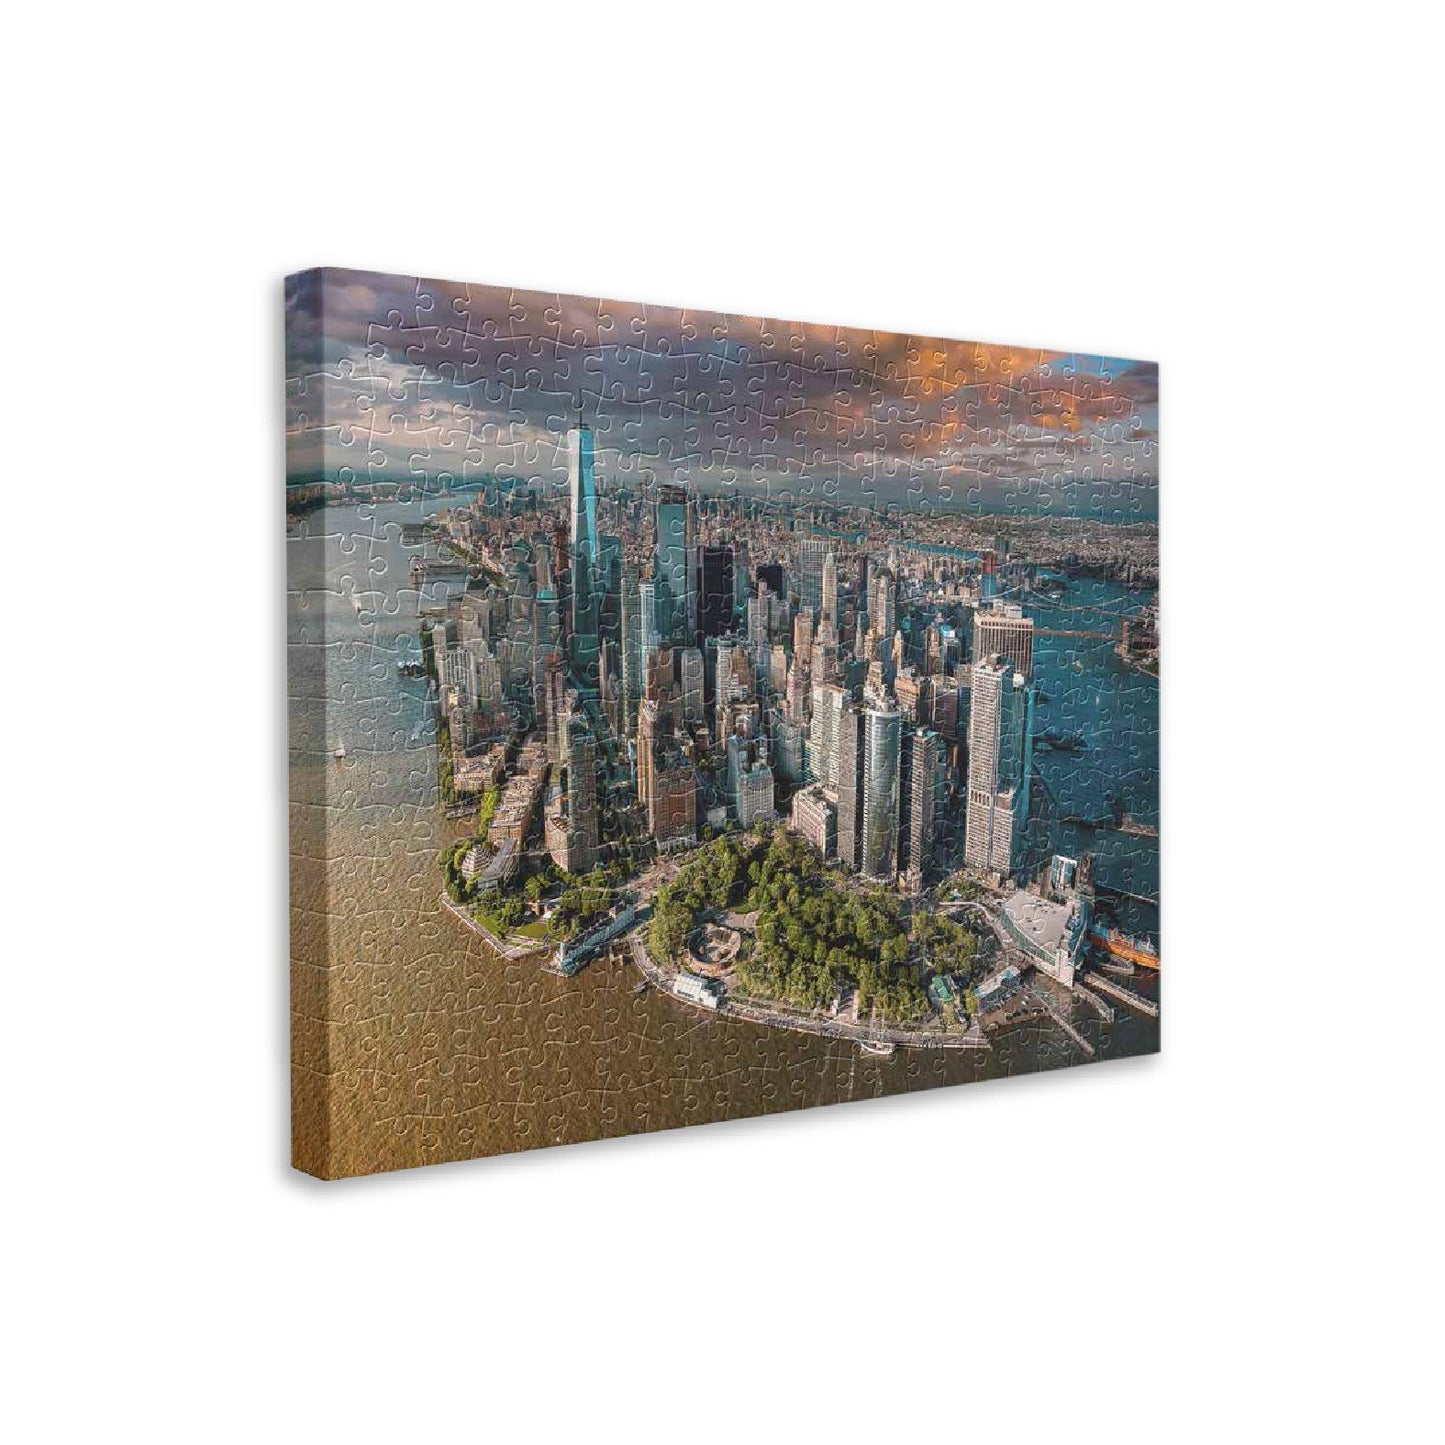 Aerial Photography - New York City, USA - 366 Piece Jigsaw Puzzle